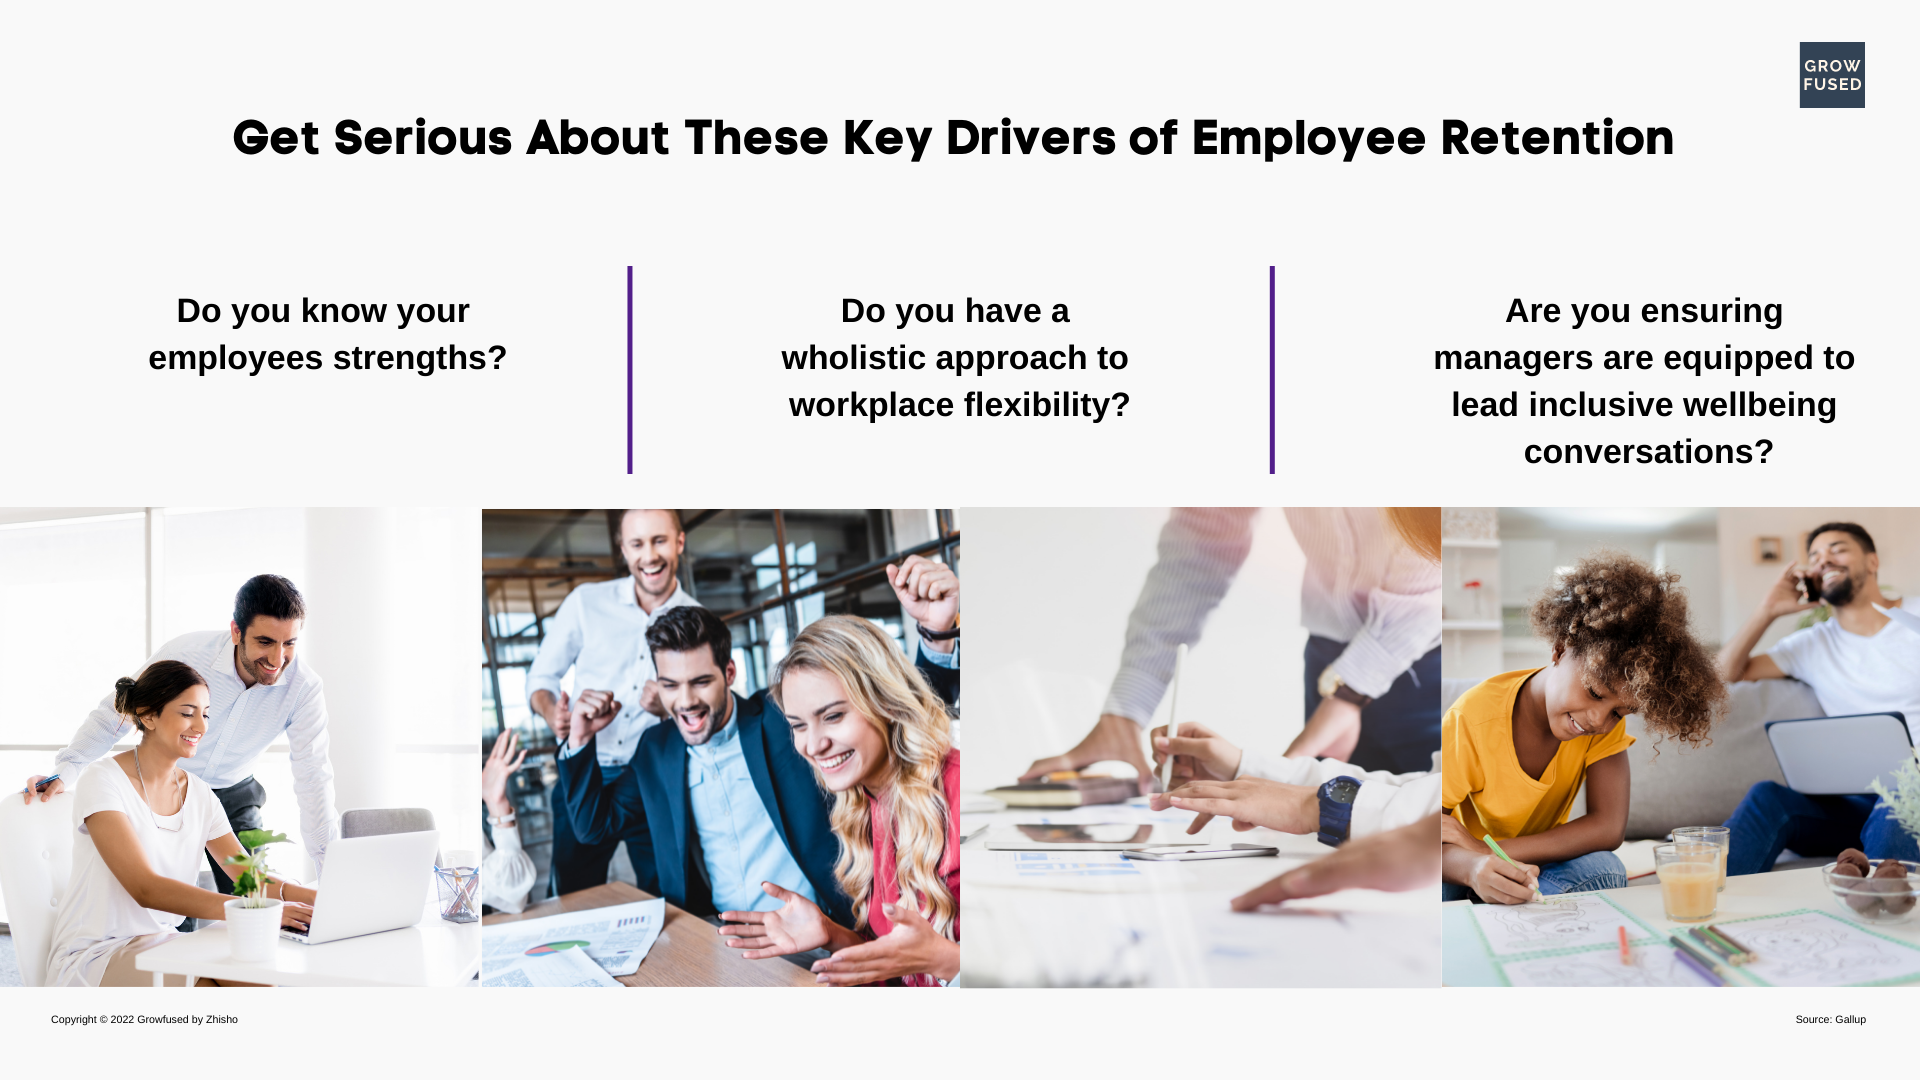 Key Drivers of Employee Retention